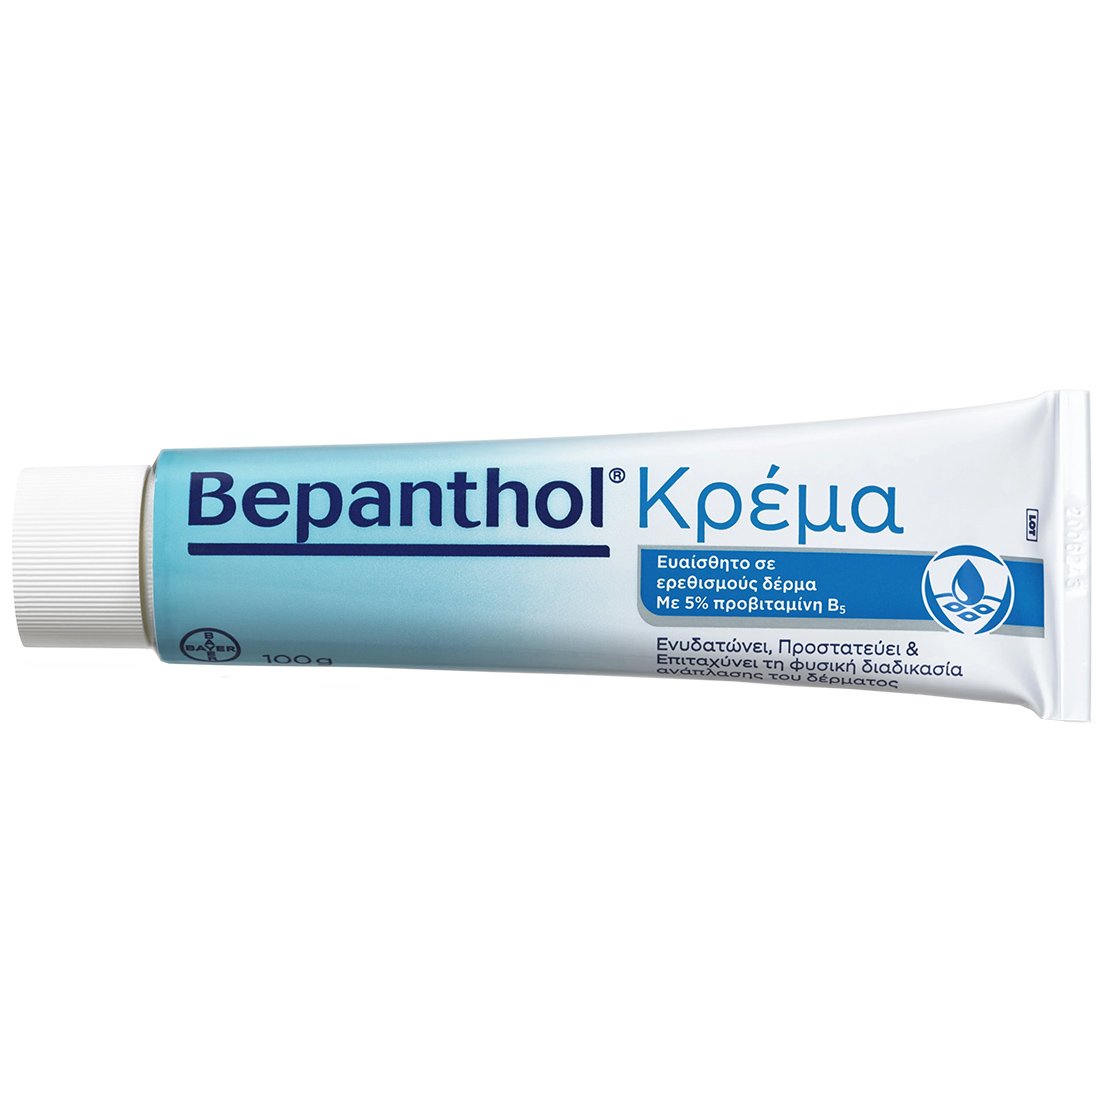 Bepanthol Bepanthol Κρέμα για το Ευαίσθητο σε Ερεθισμούς Δέρμα, Ενυδατώνει, Προστατεύει & Επιταχύνει τη Φυσική Διαδικασία Ανάπλασης του Δέρματος με Προβιταμίνη B5, 100g